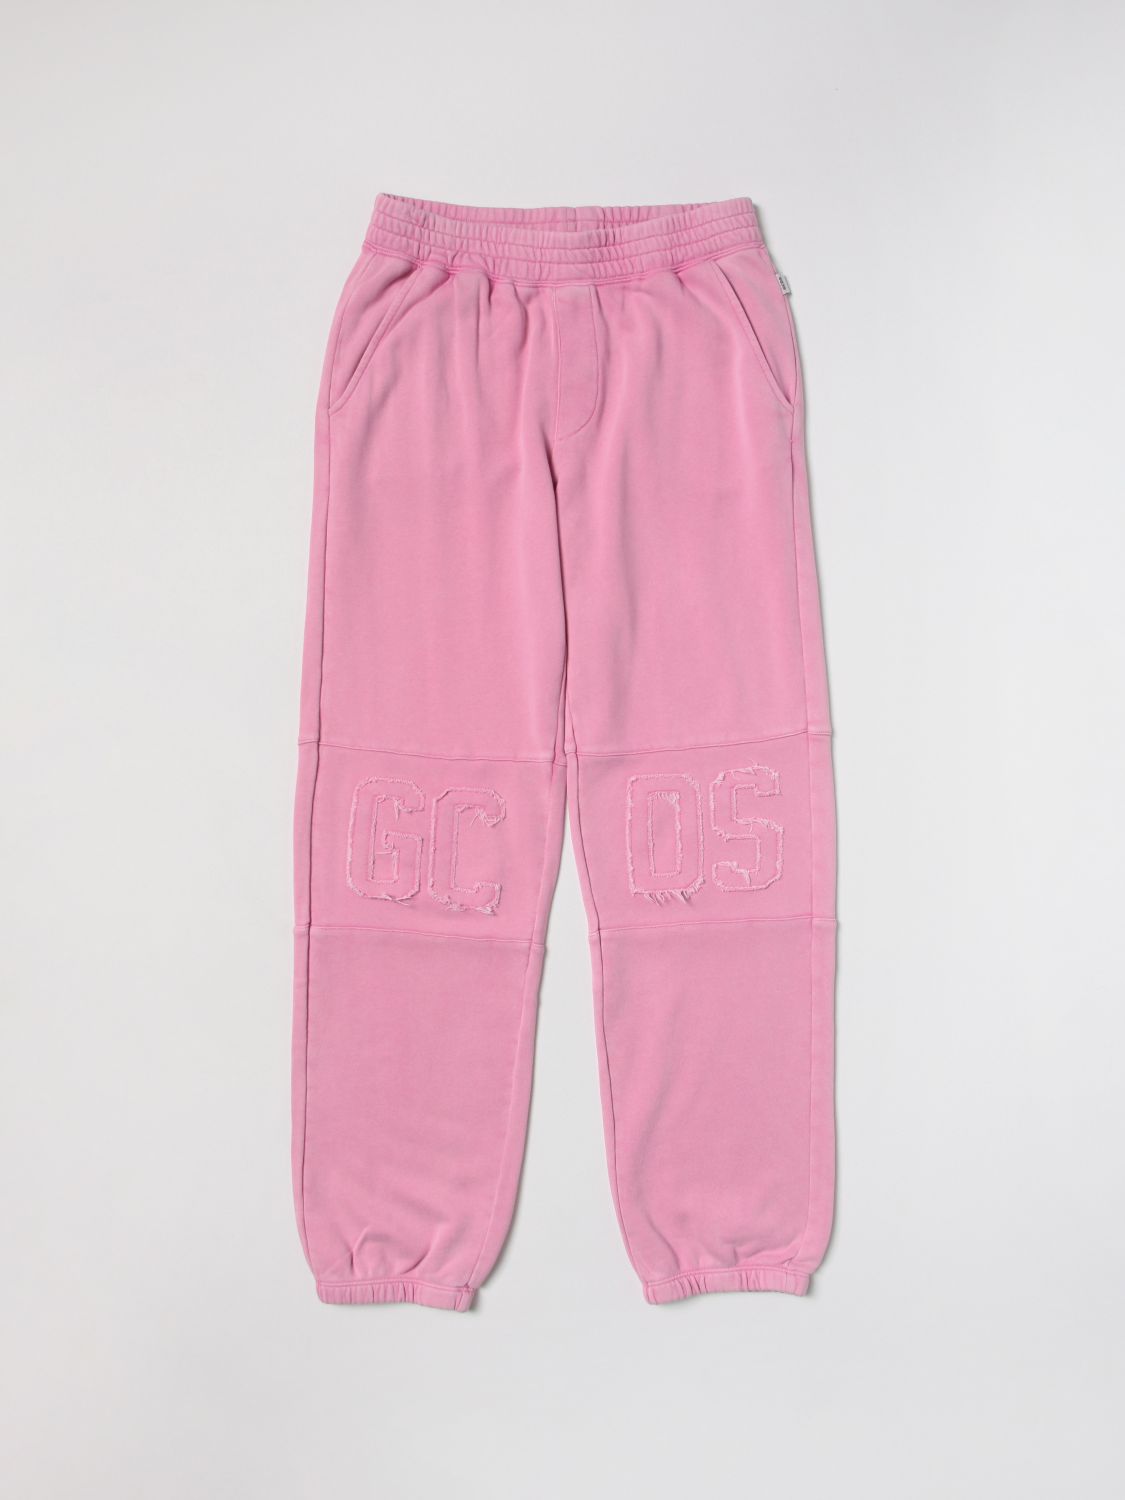 Gcds Pants  Kids Kids Color Pink